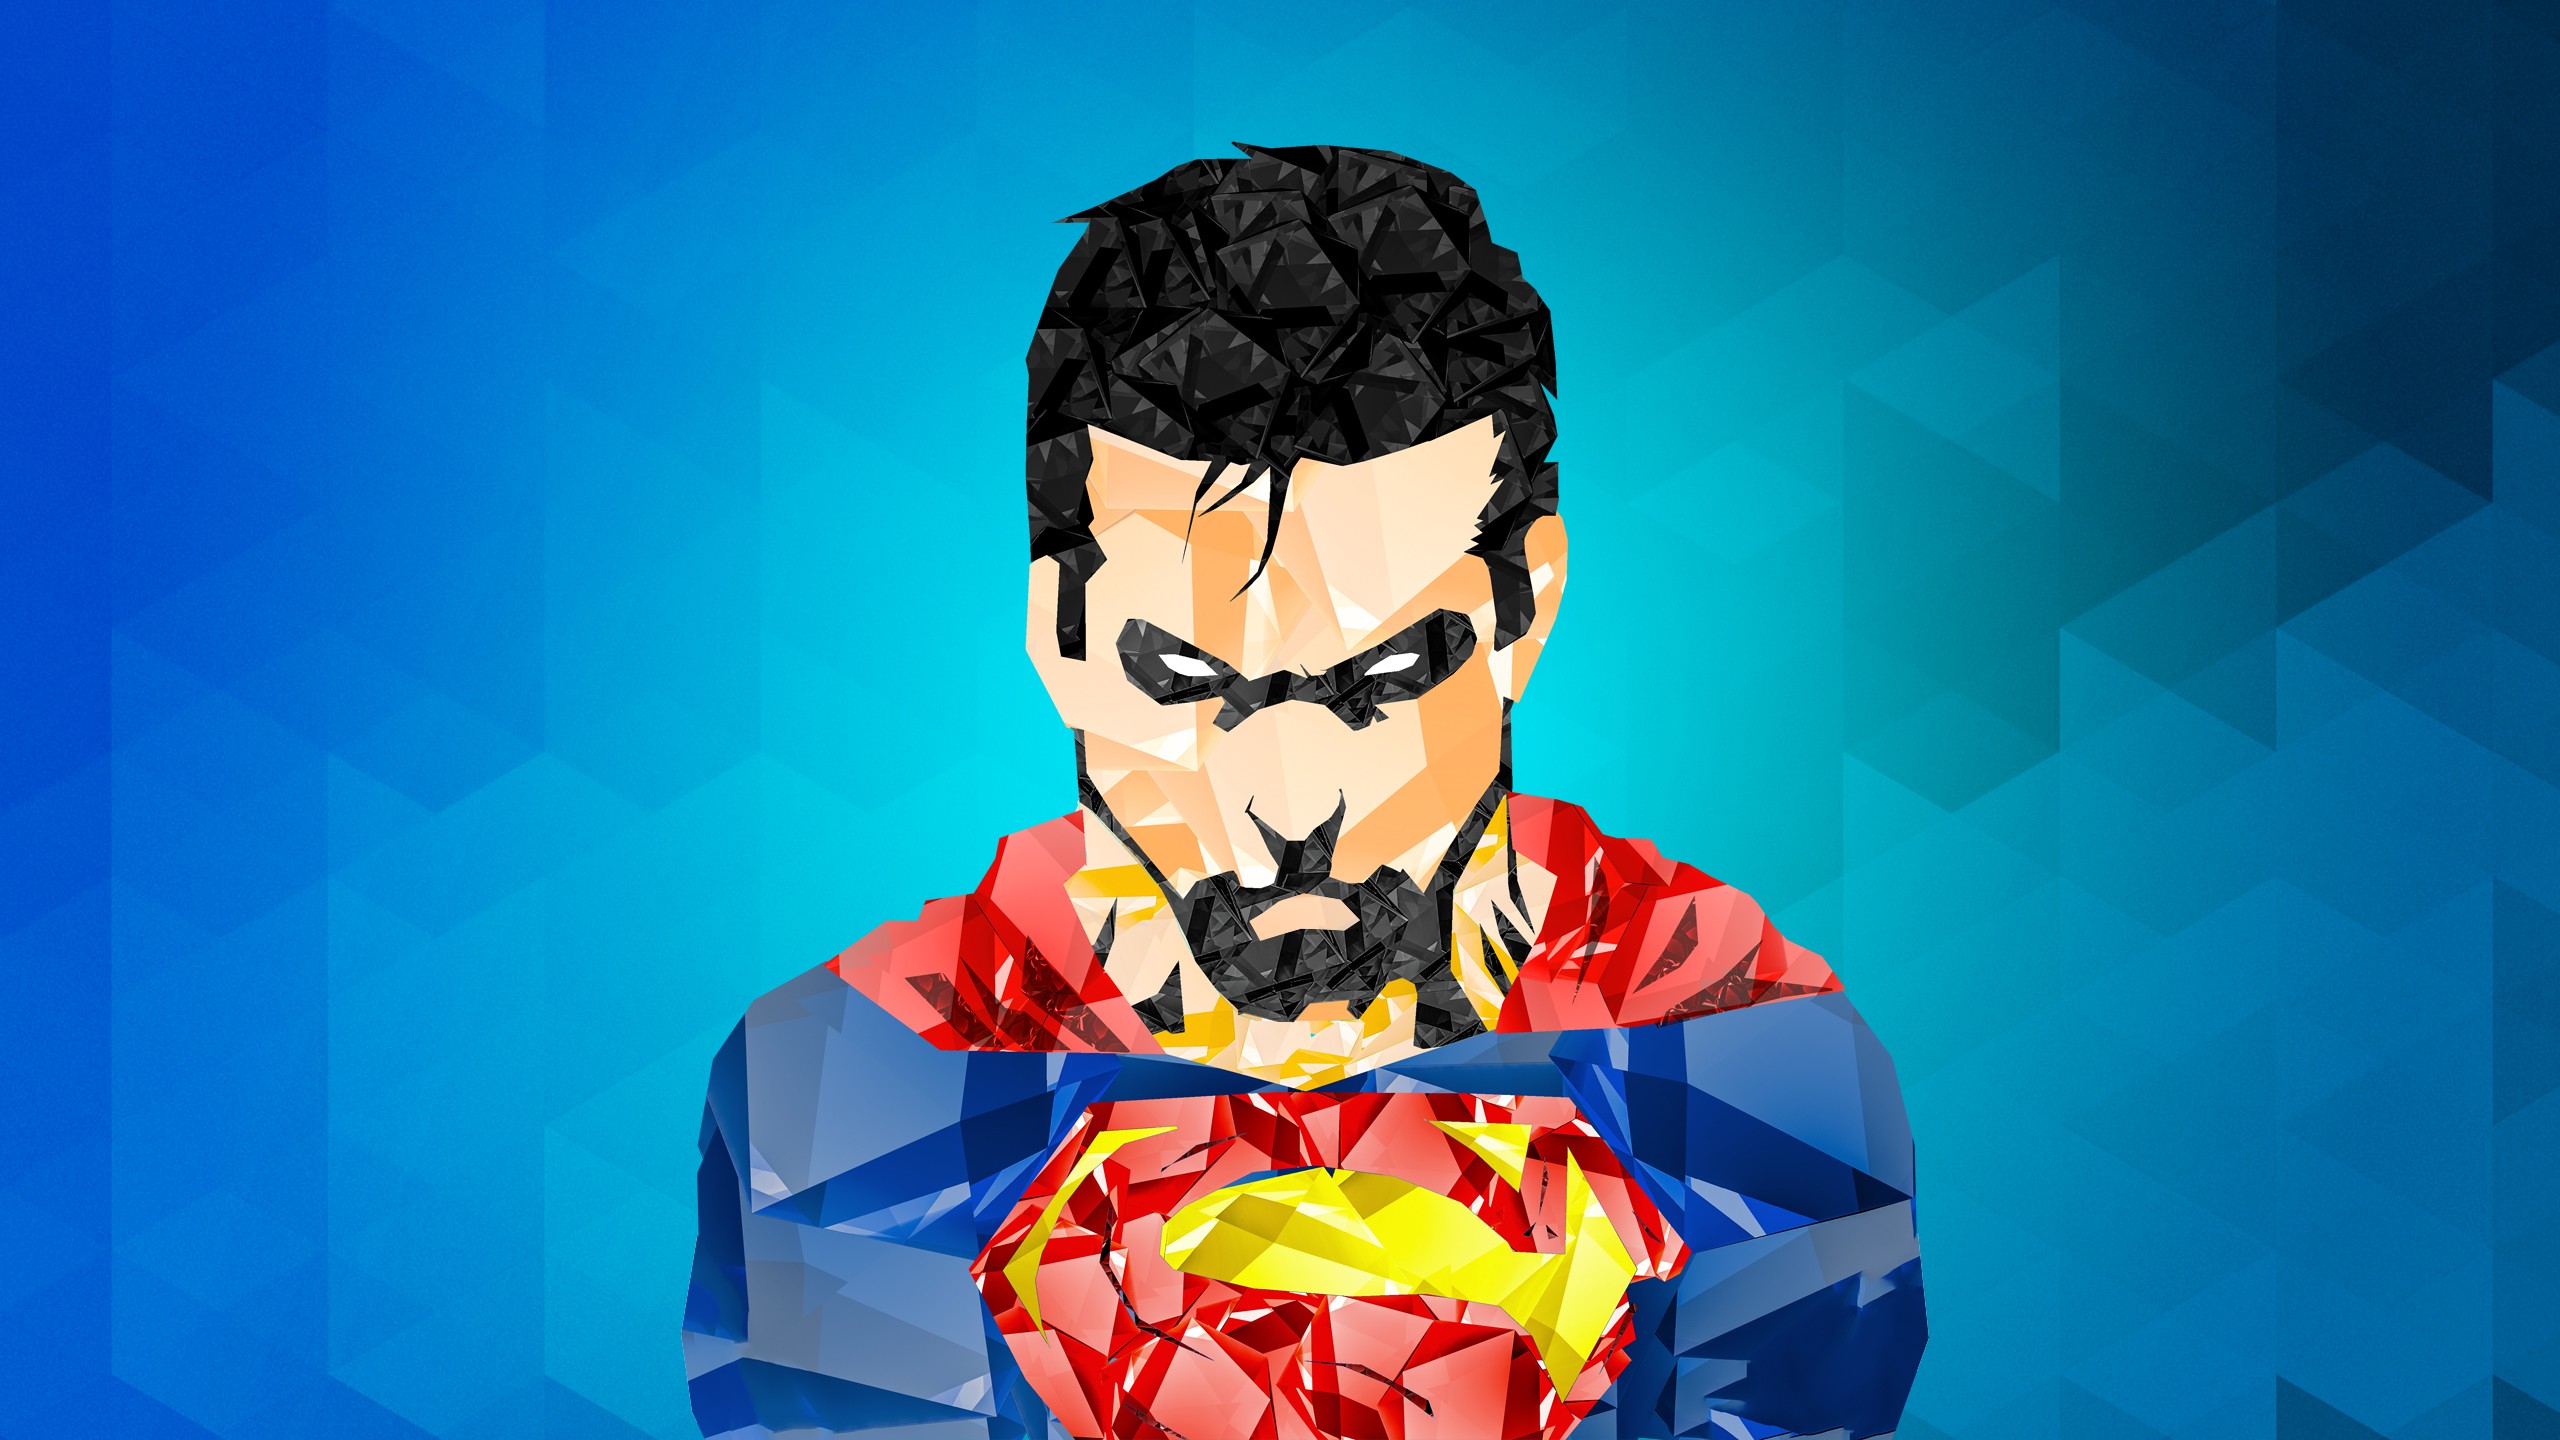 General 2560x1440 Superman digital art poly cyan blue superhero blue background fan art artwork black hair Clark Kent superman logo abstract